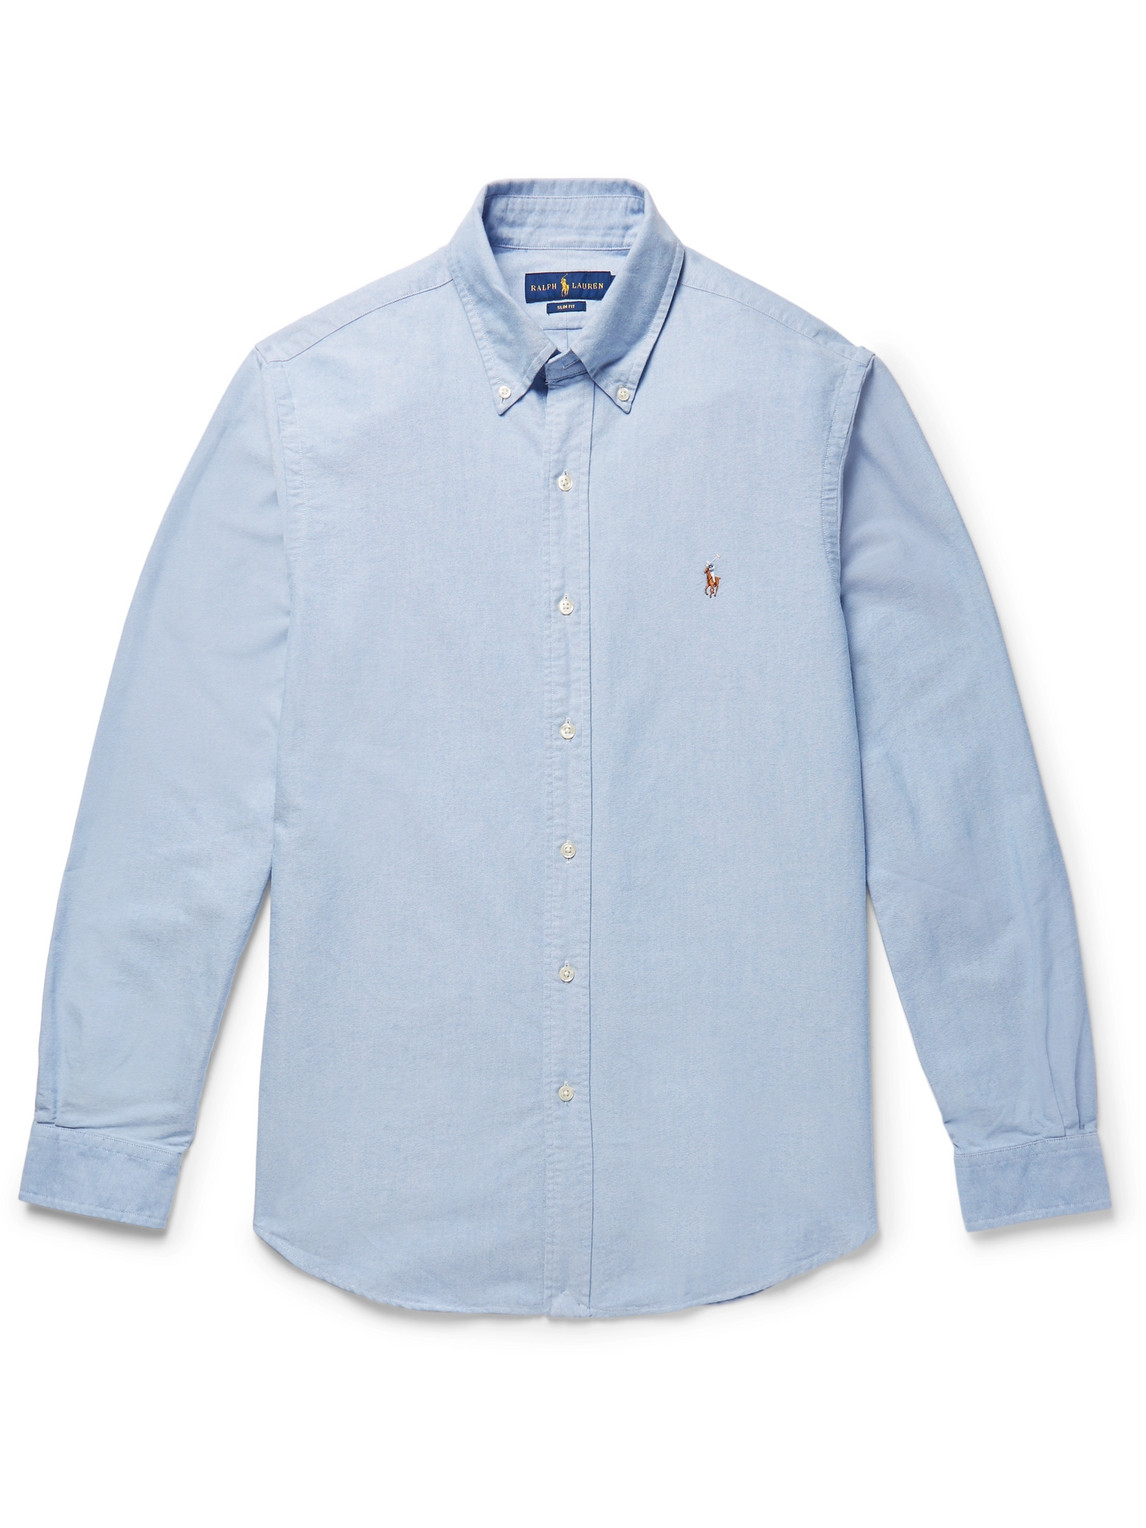 Polo Ralph Lauren Classic Fit Long Sleeve Cotton Oxford Button 